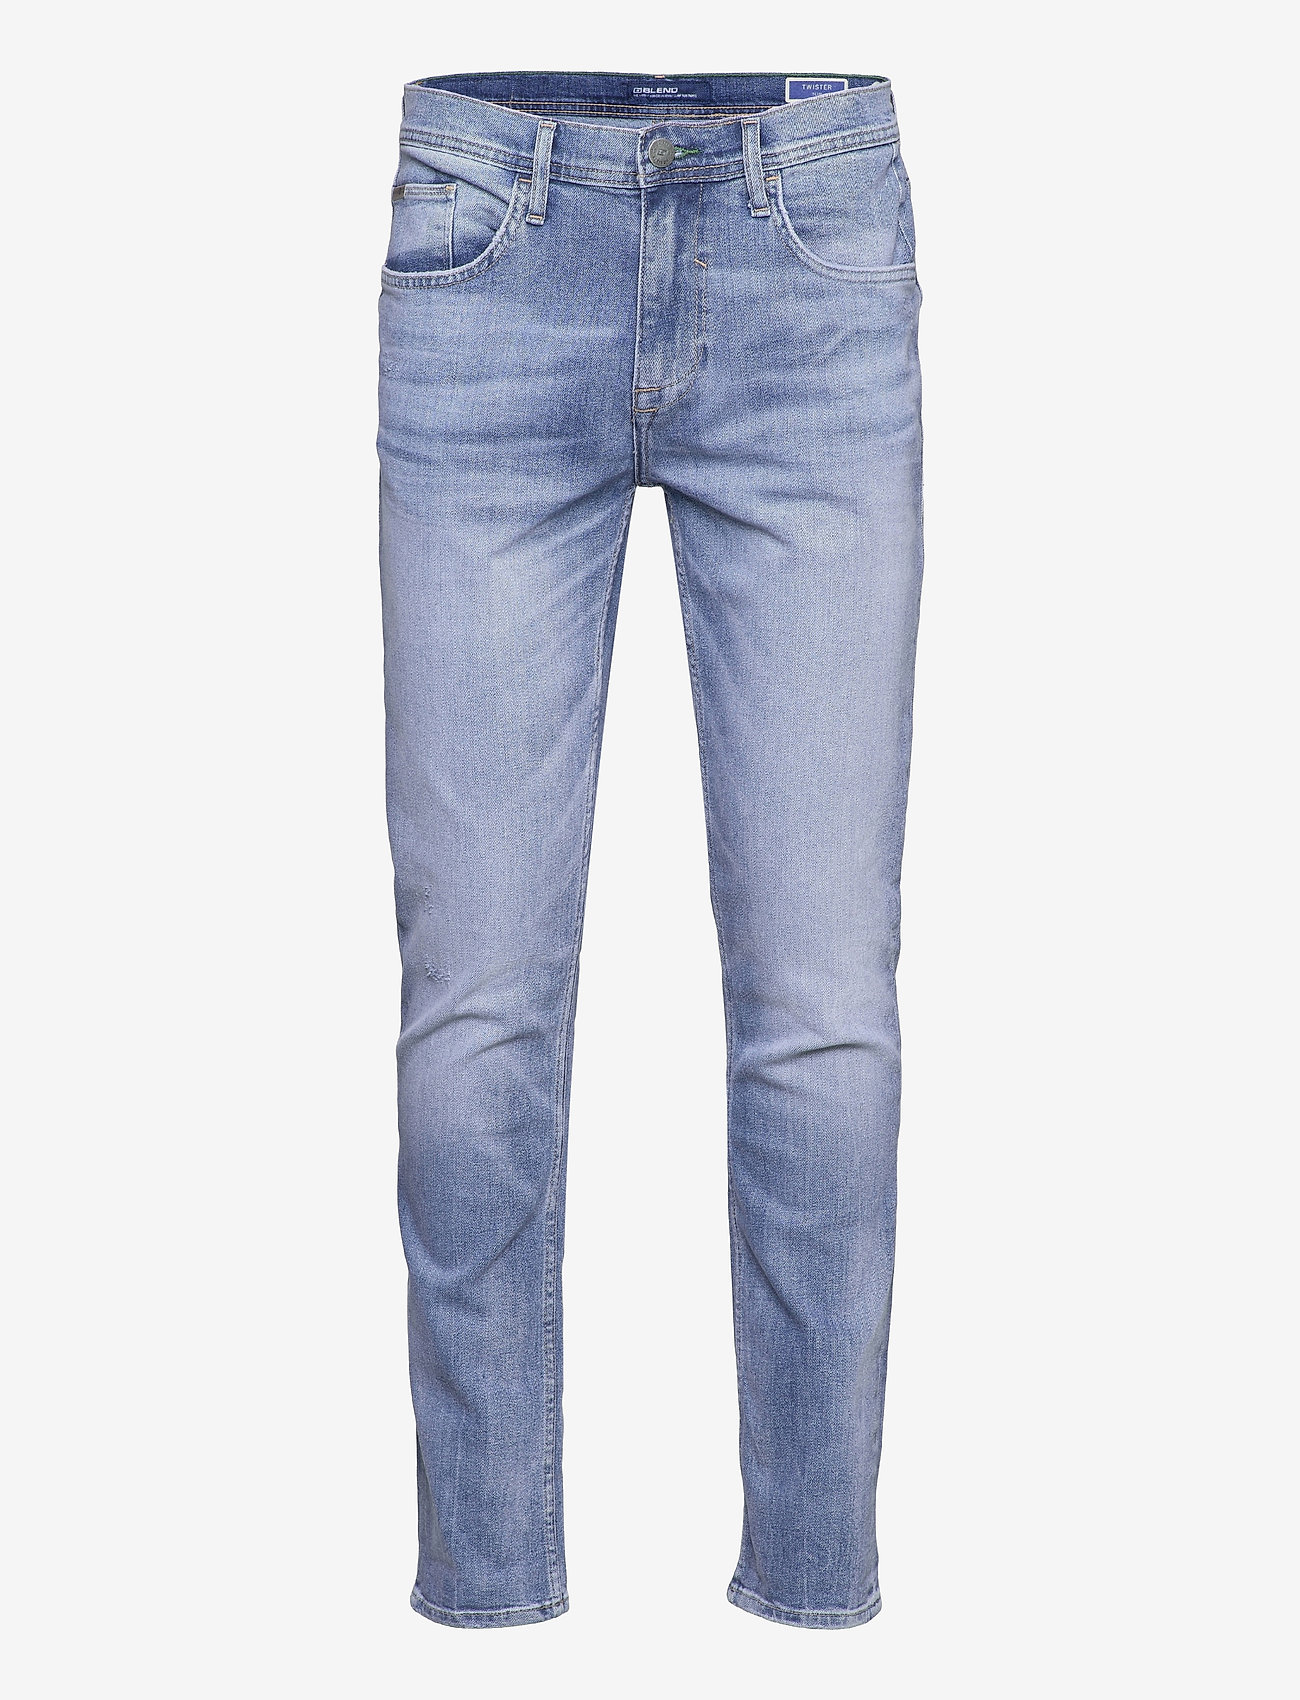 Blend Twister Jeans Ireland, SAVE 37%